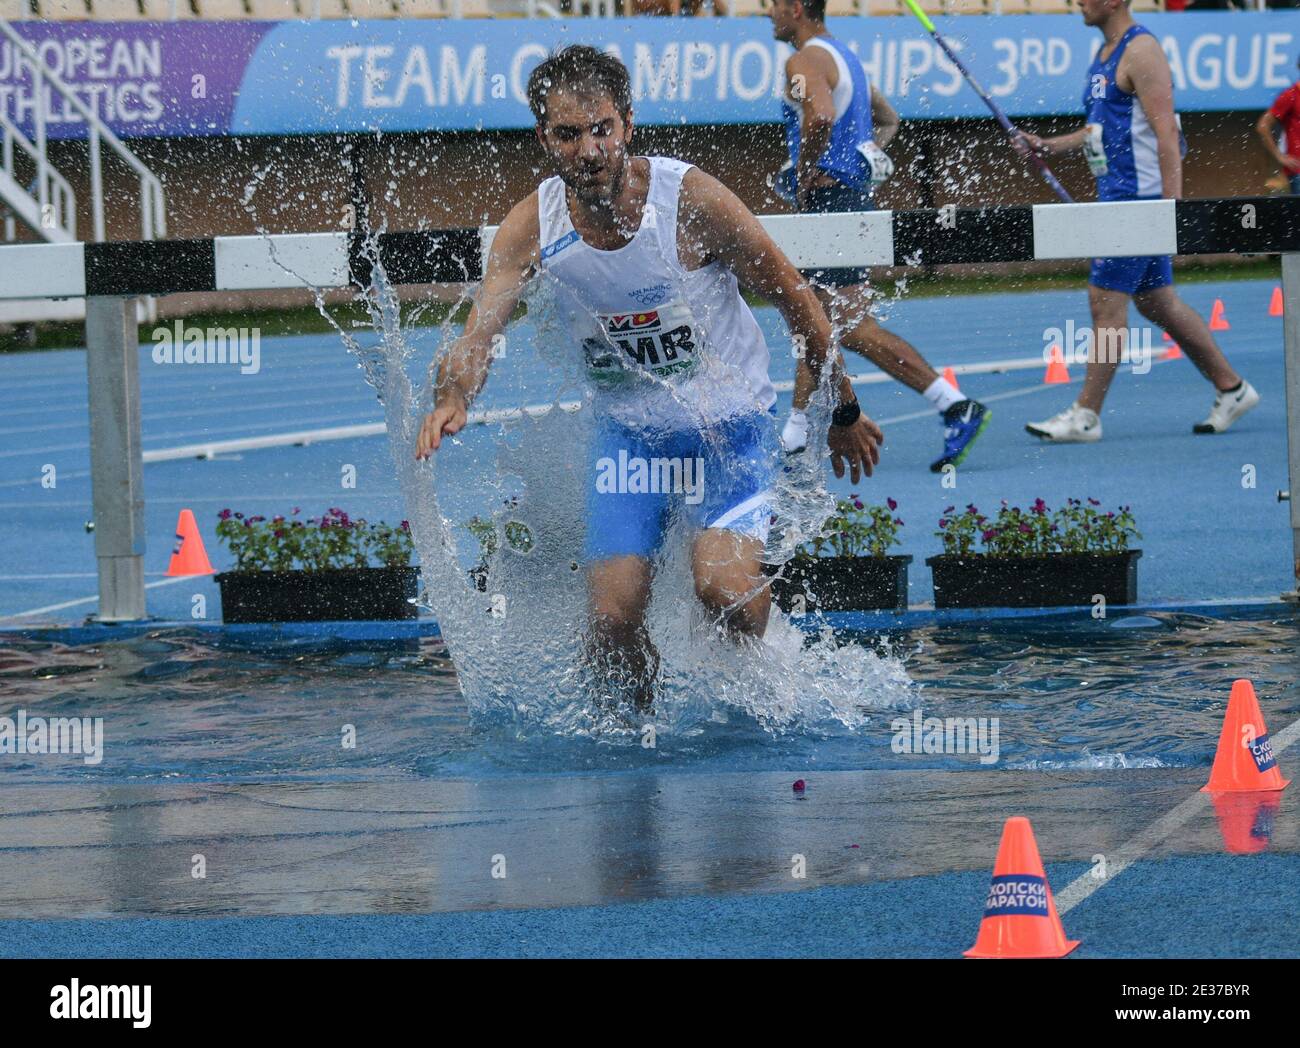 Skopje, Macedonia - August, 10-11, 2019 European Athletics Team Championships - Third League. (3000m steeplechase) Stock Photo